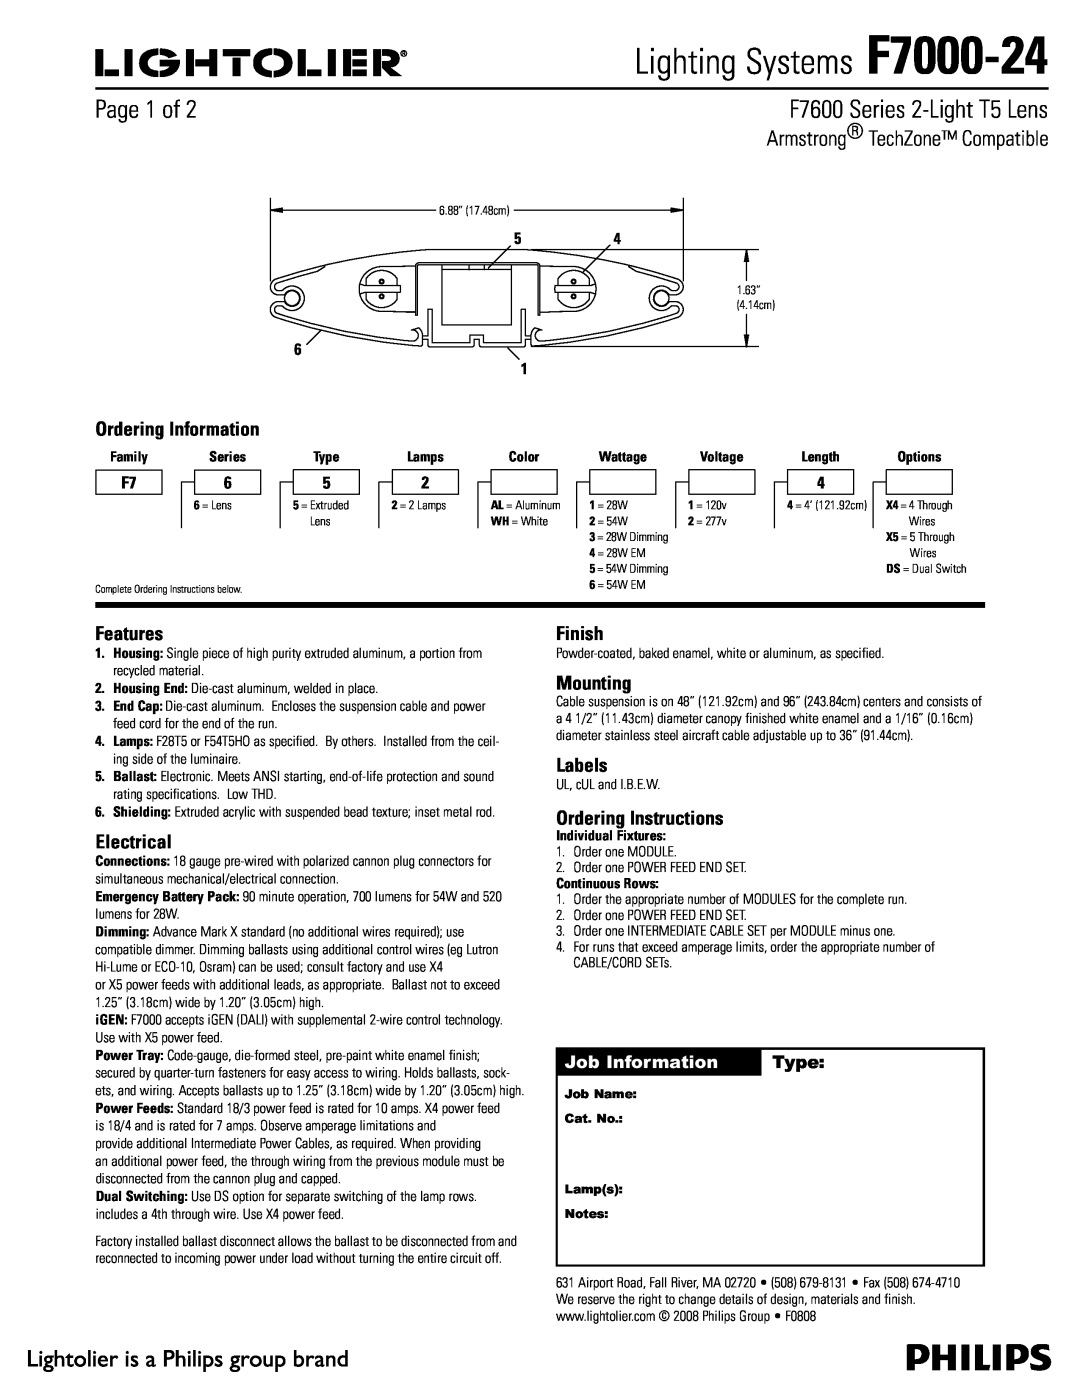 Lightolier specifications 4FSJFT-JHIU5-FOT, Job Information, Type, Lighting Systems F7000-24, Features 